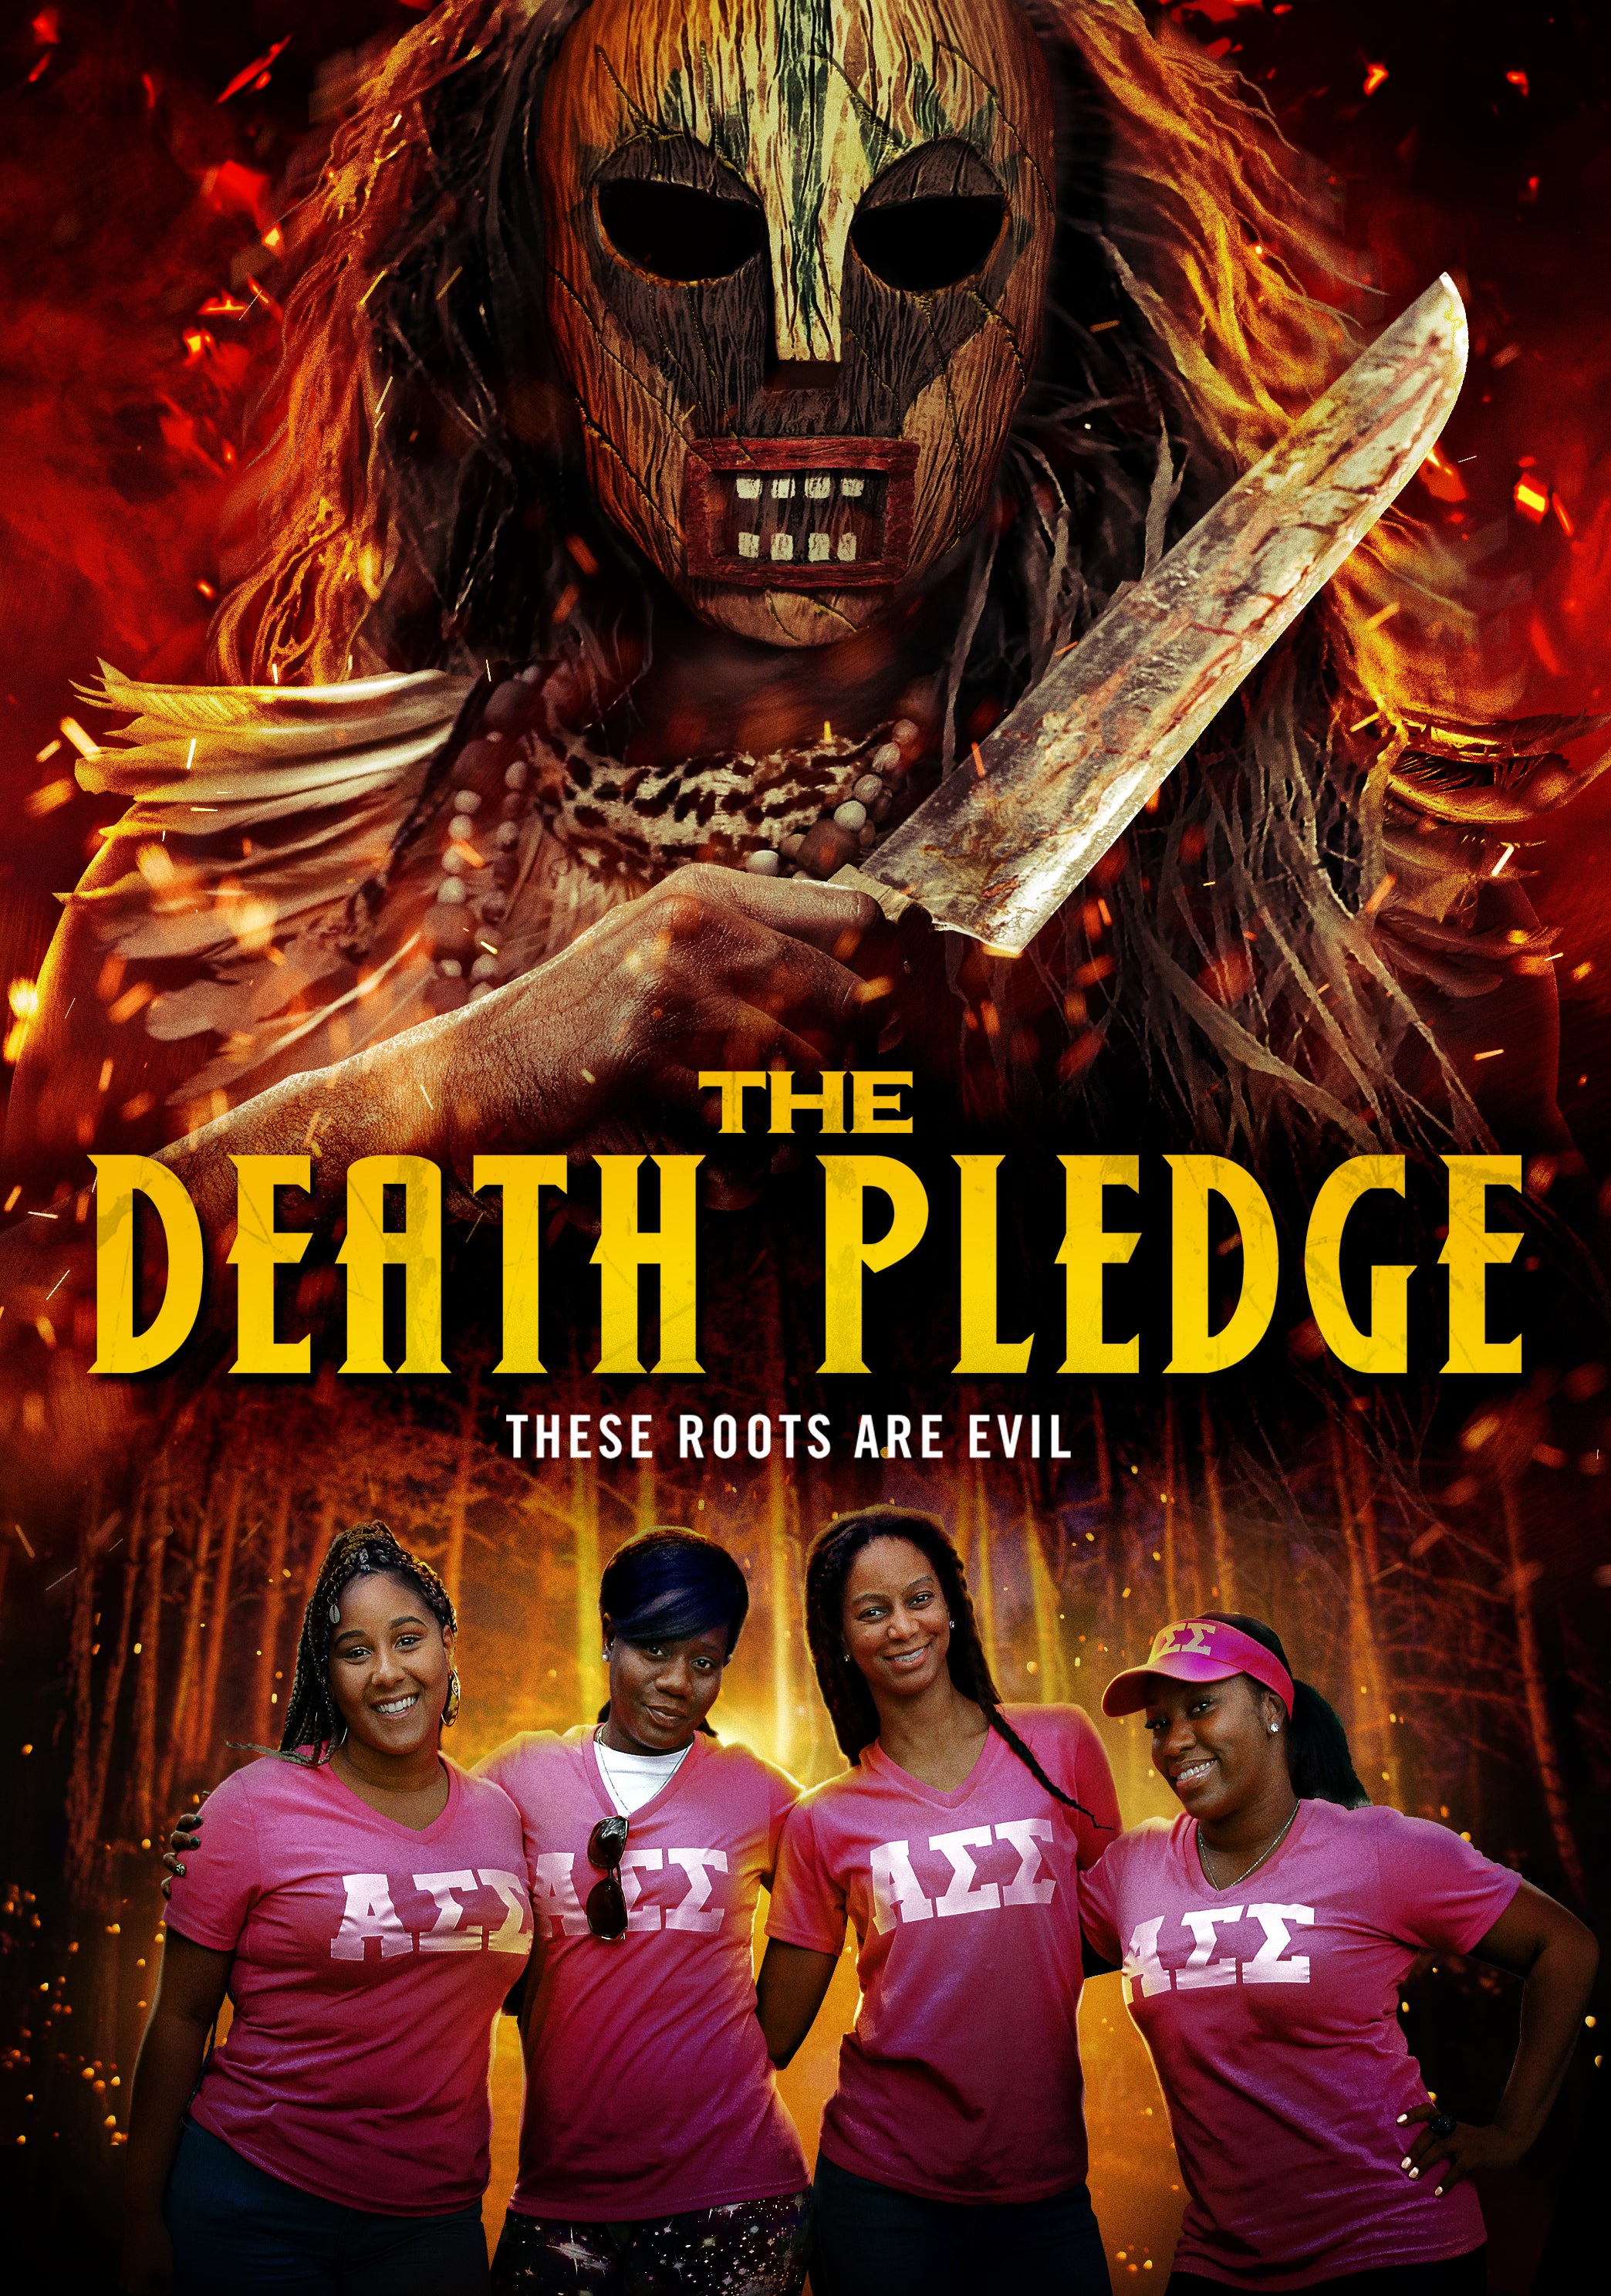 THE DEATH PLEDGE DVD